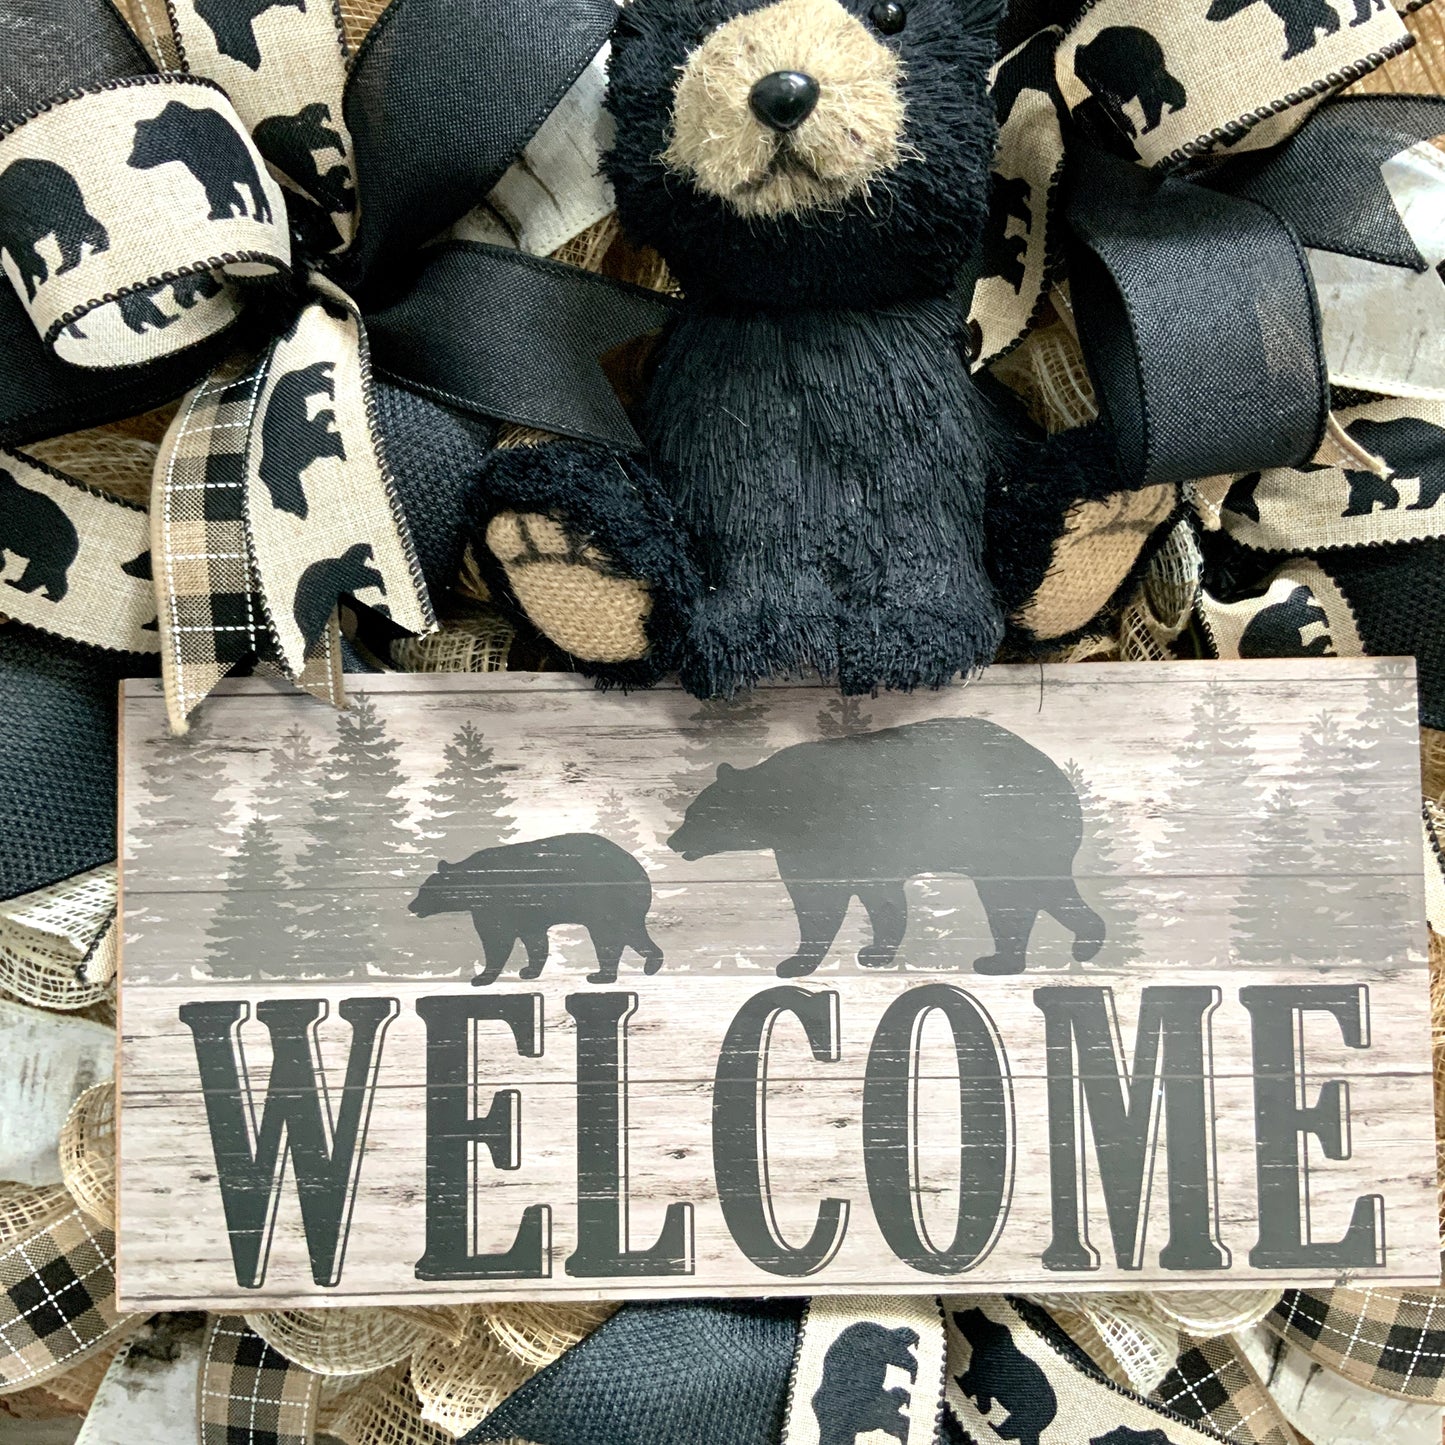 Black Bear Wreath, Black Bear Decor, Cabin Bear Decor, Cabin Wreath, Welcome Bear Wreath, Cabin Bear Wreath, Bear Welcome Sign